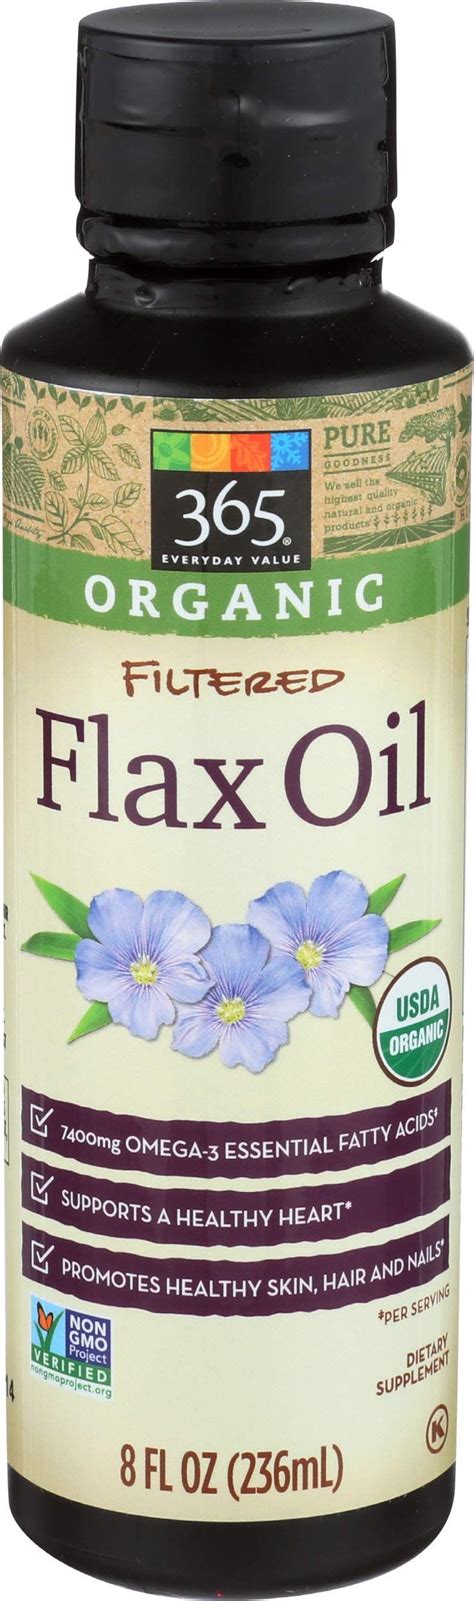 whole foods 365 flaxseed oil